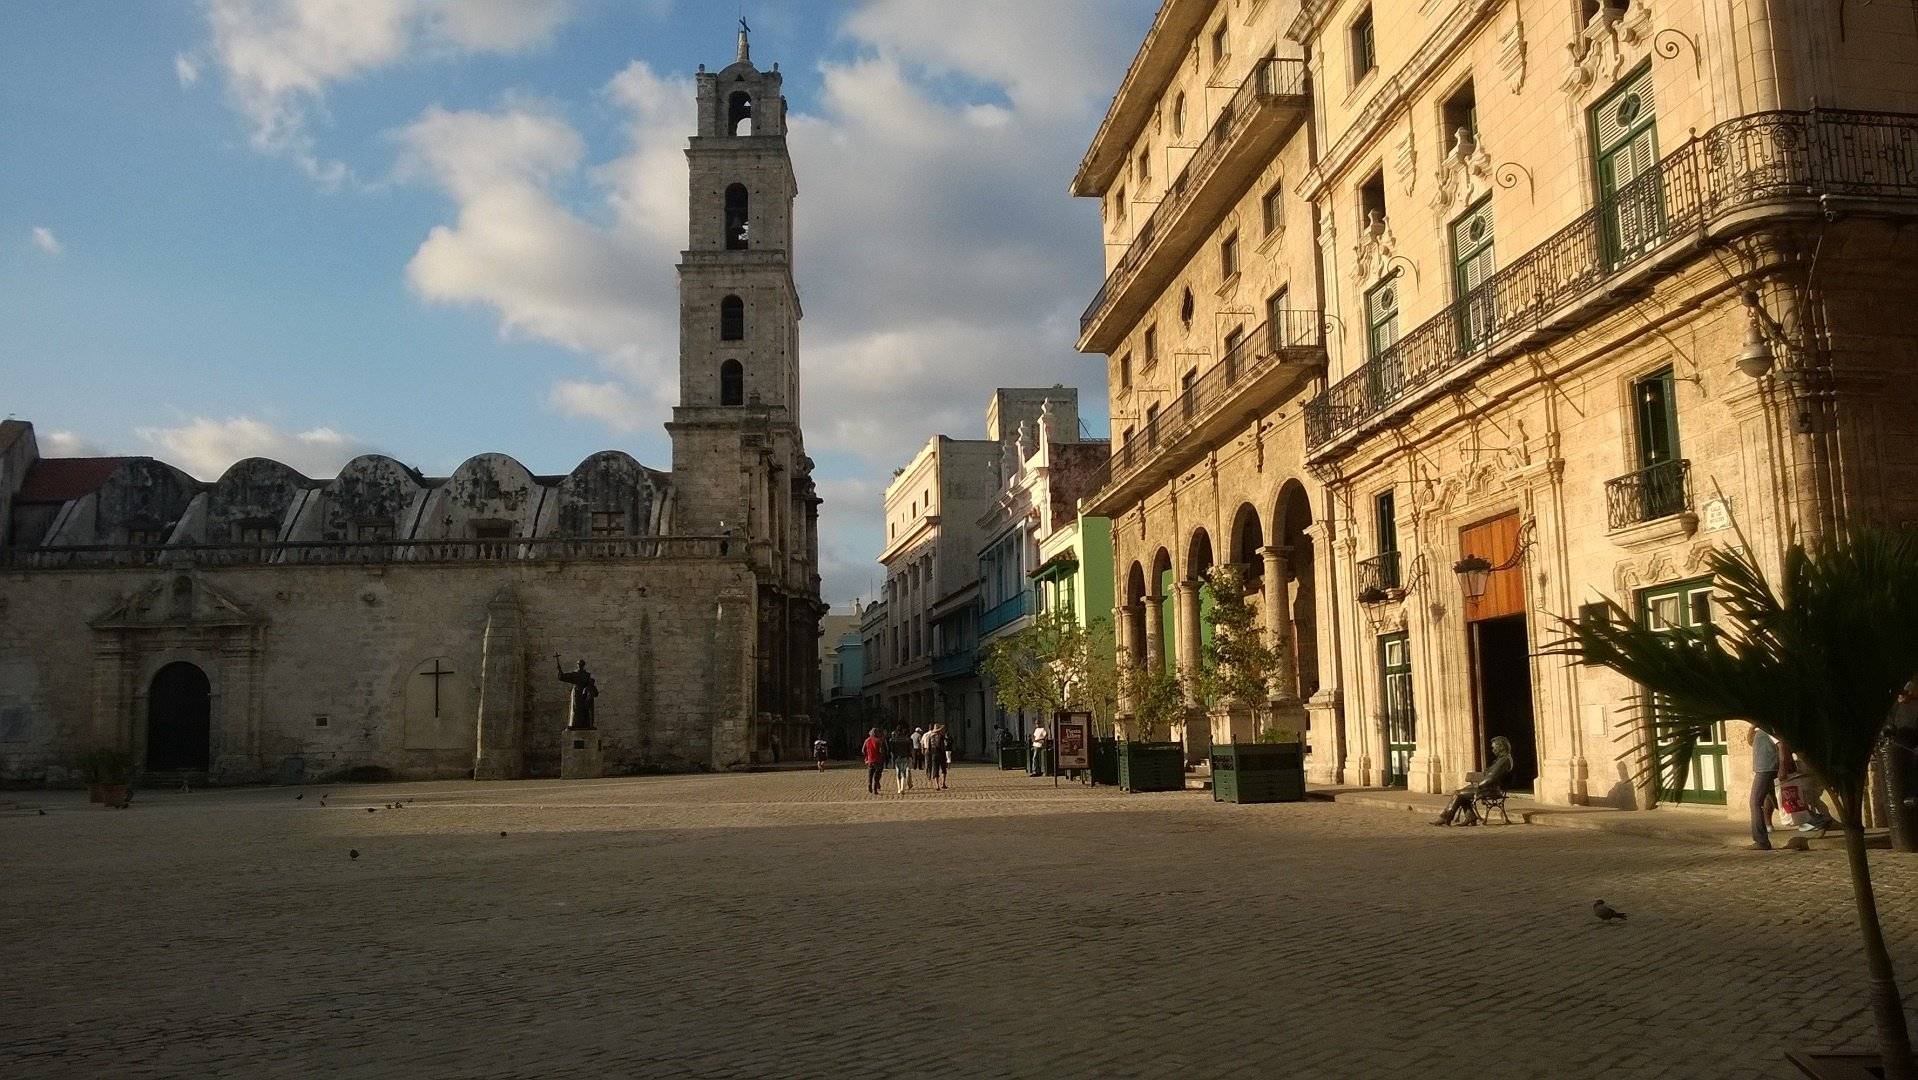 Willkommen in Havanna!